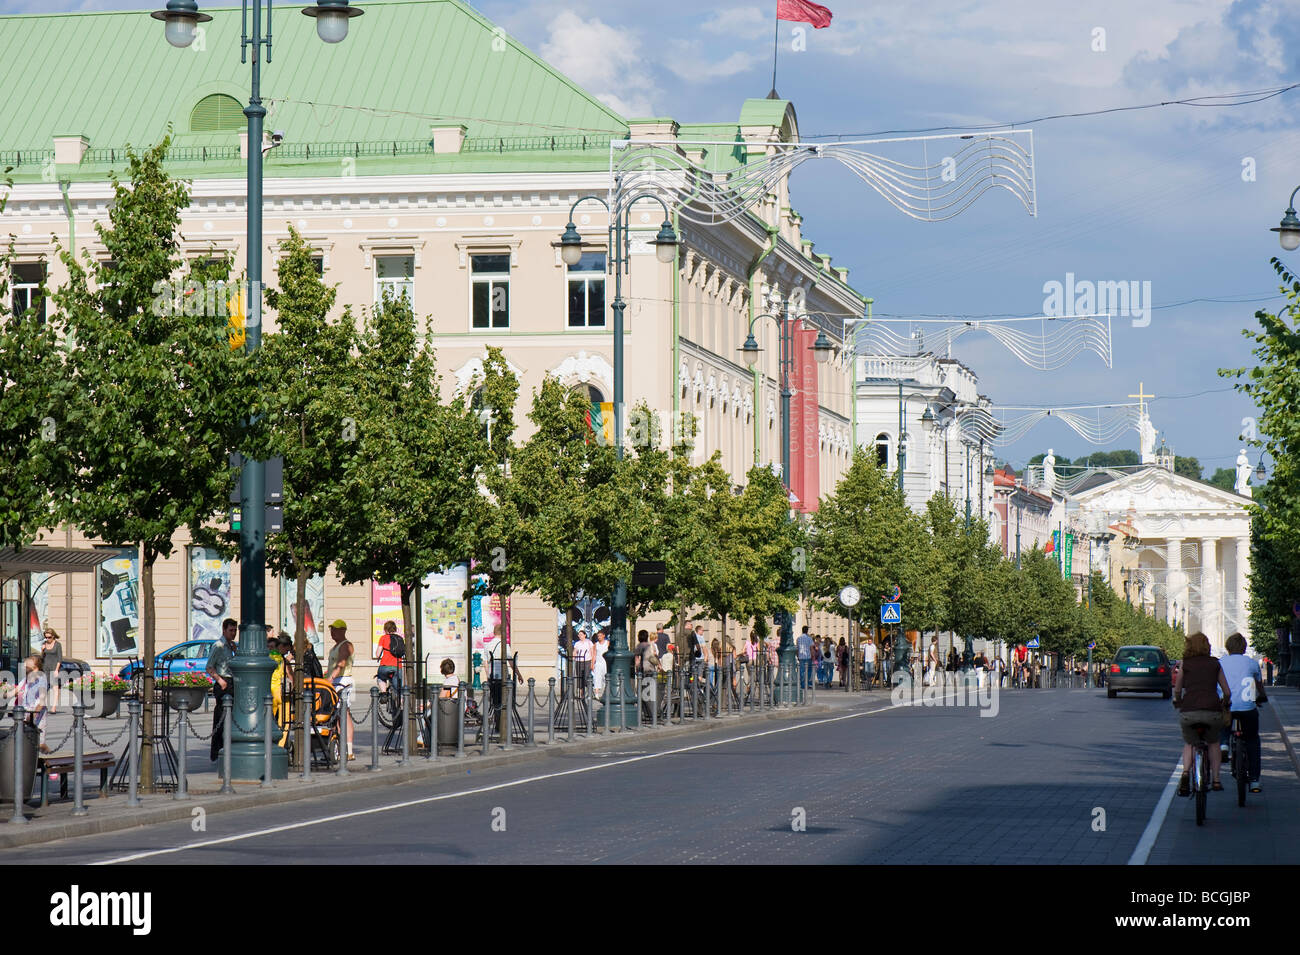 People strolling along street Vilnius Lithuania Stock Photo